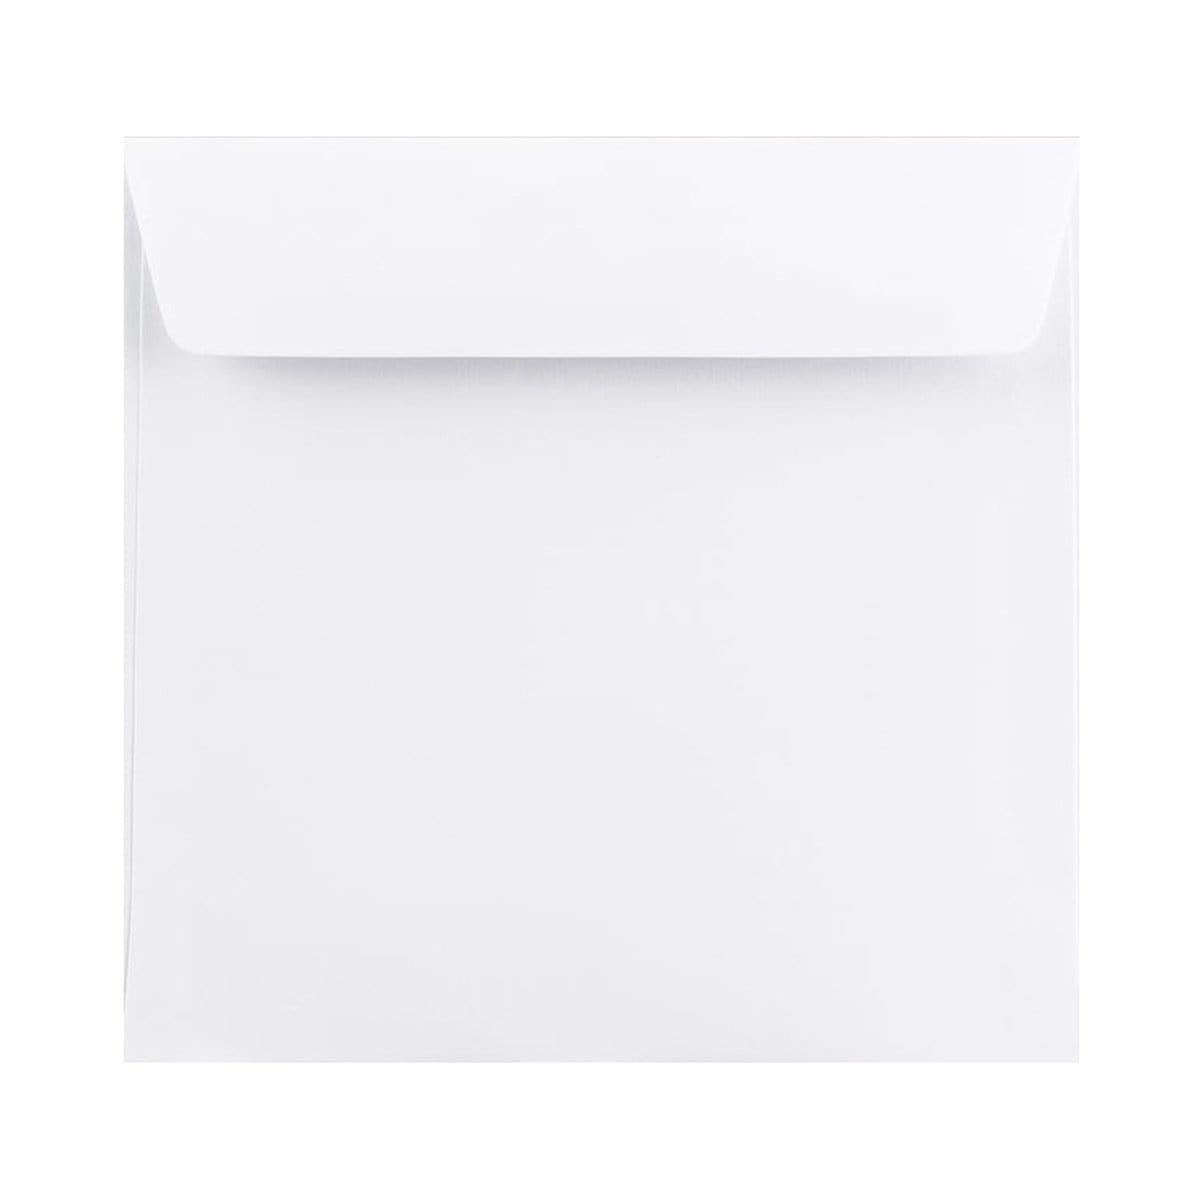 185 x 185 White Premium Ultra 120gsm Envelopes [Qty 500] - All Colour Envelopes